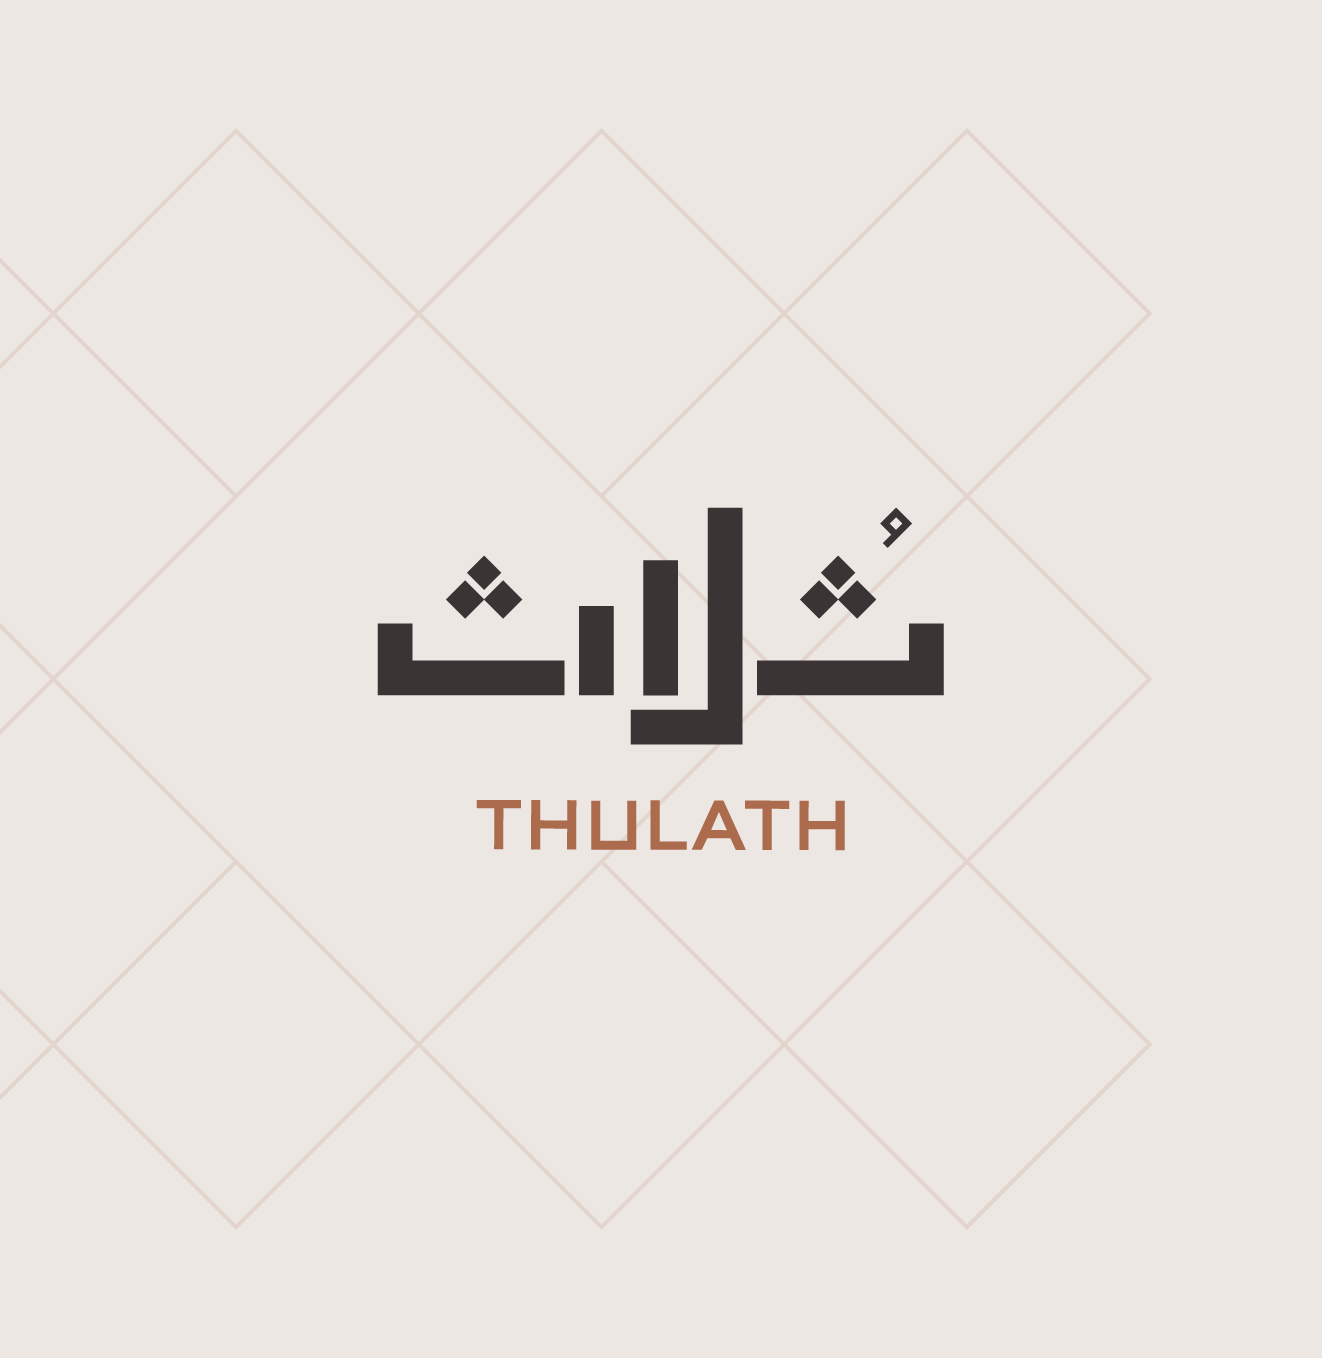 Thulath